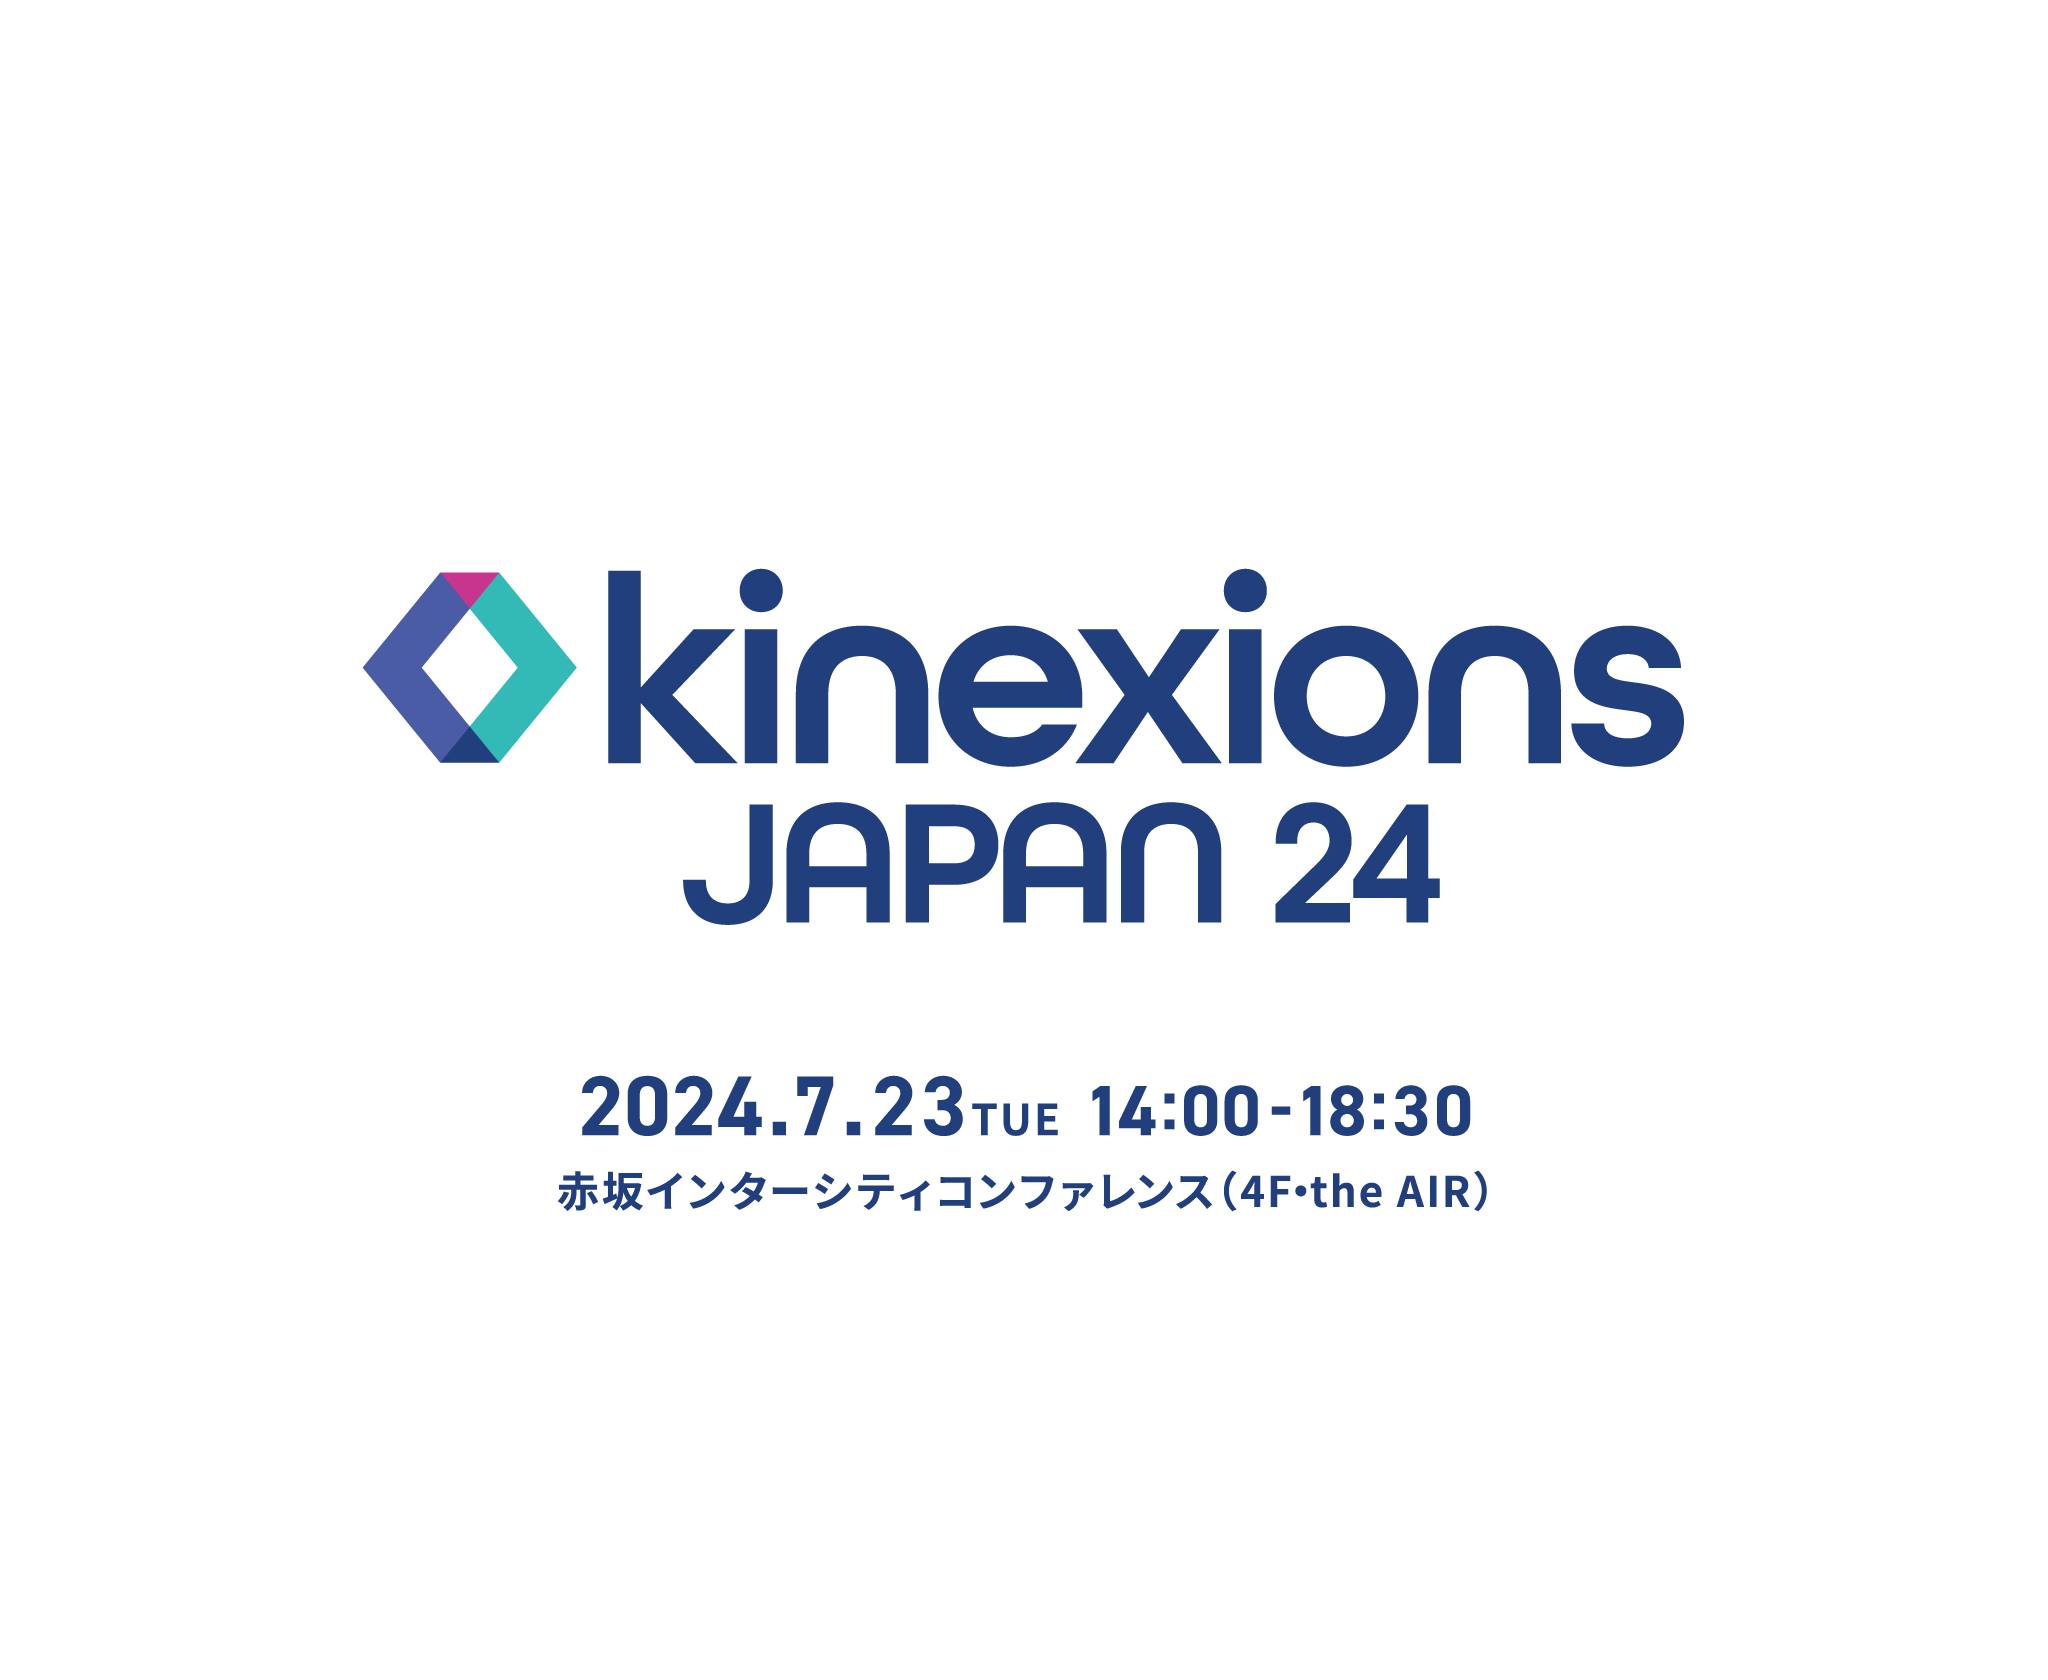 Kinexions Japan 24